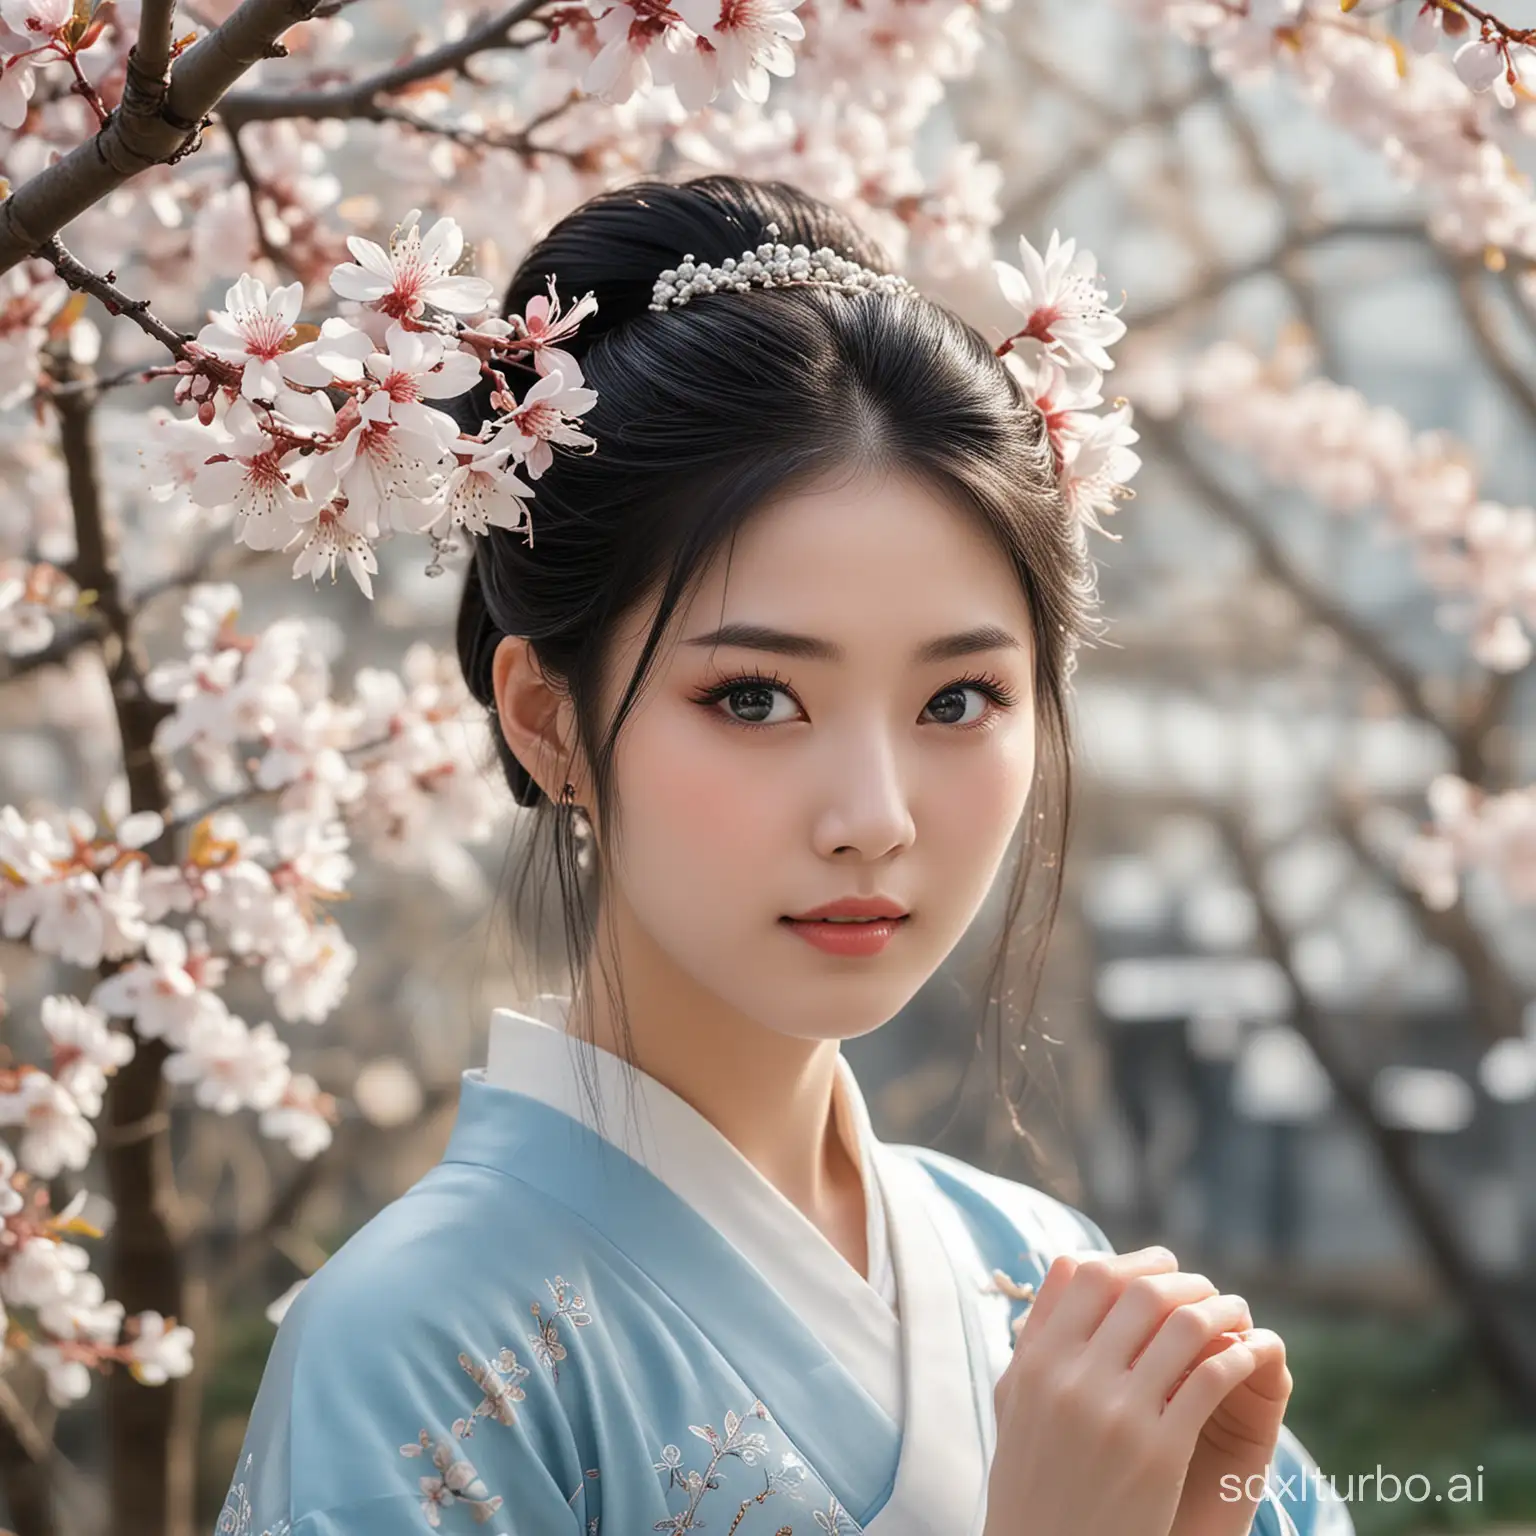 Ethereal-Girl-Admiring-Cherry-Blossoms-in-SemiTransparent-Hanfu